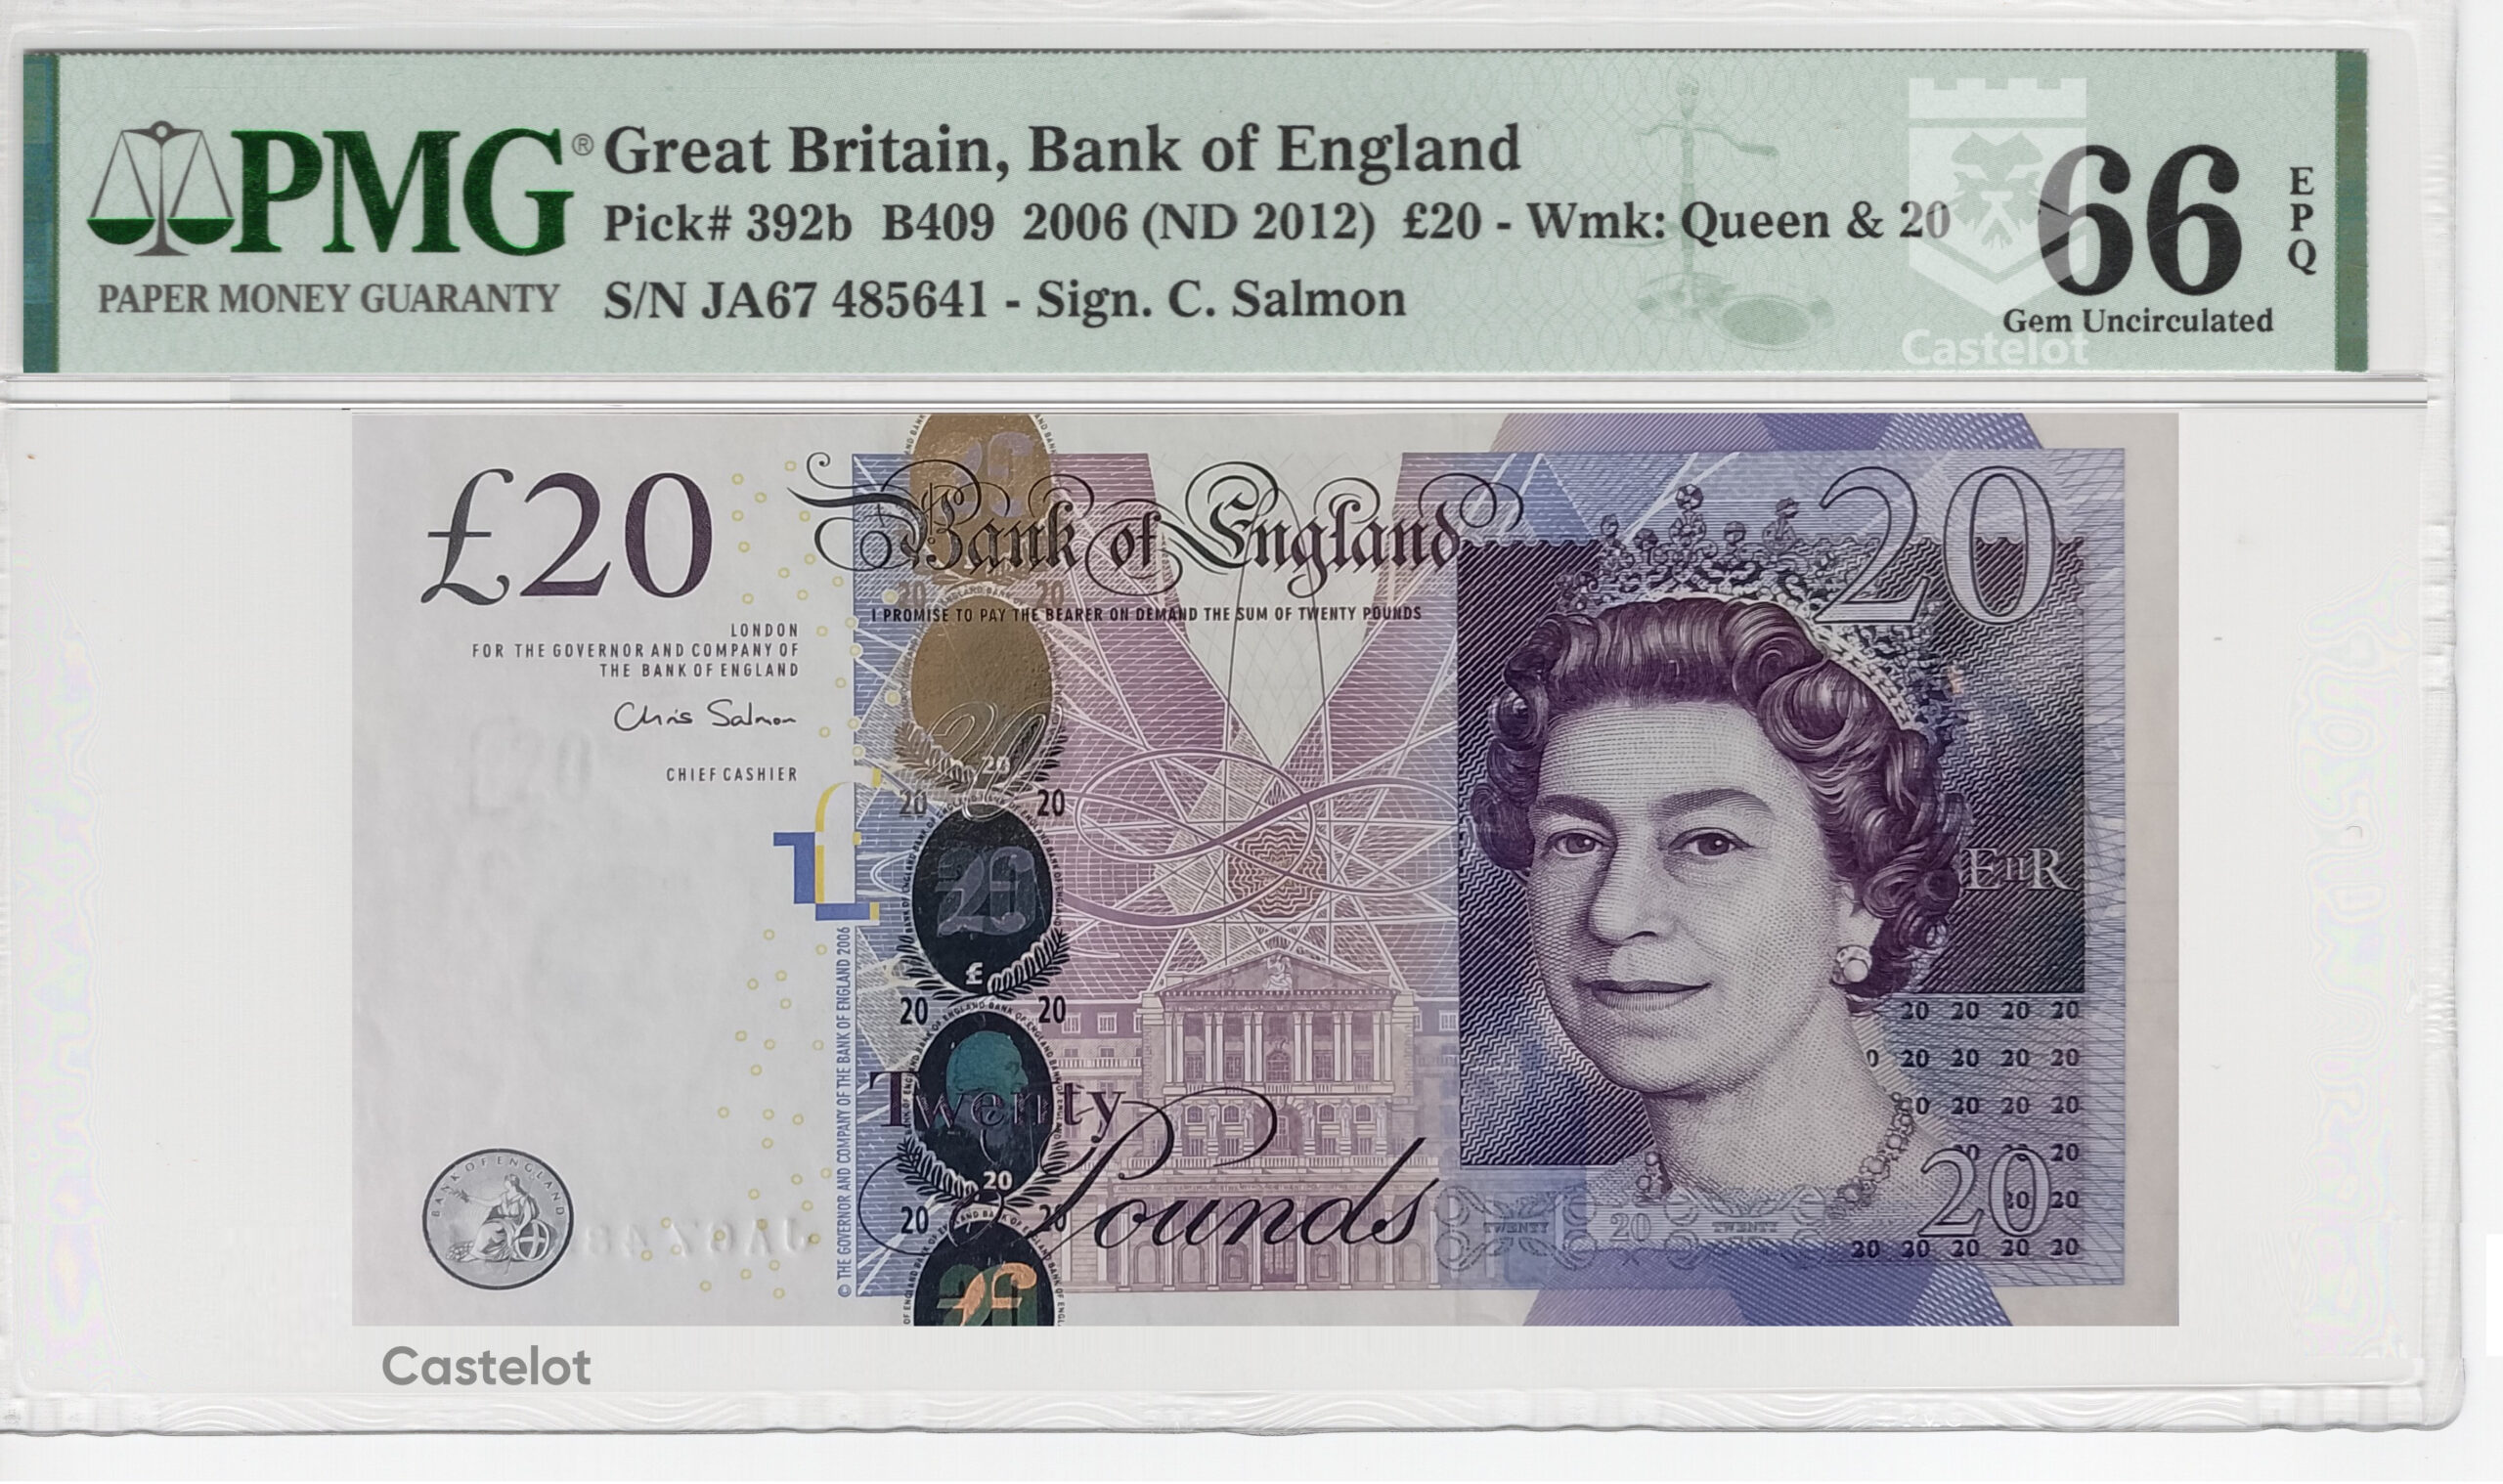 Gran Bretaña 2012 Billete 20 Libras PMG 66